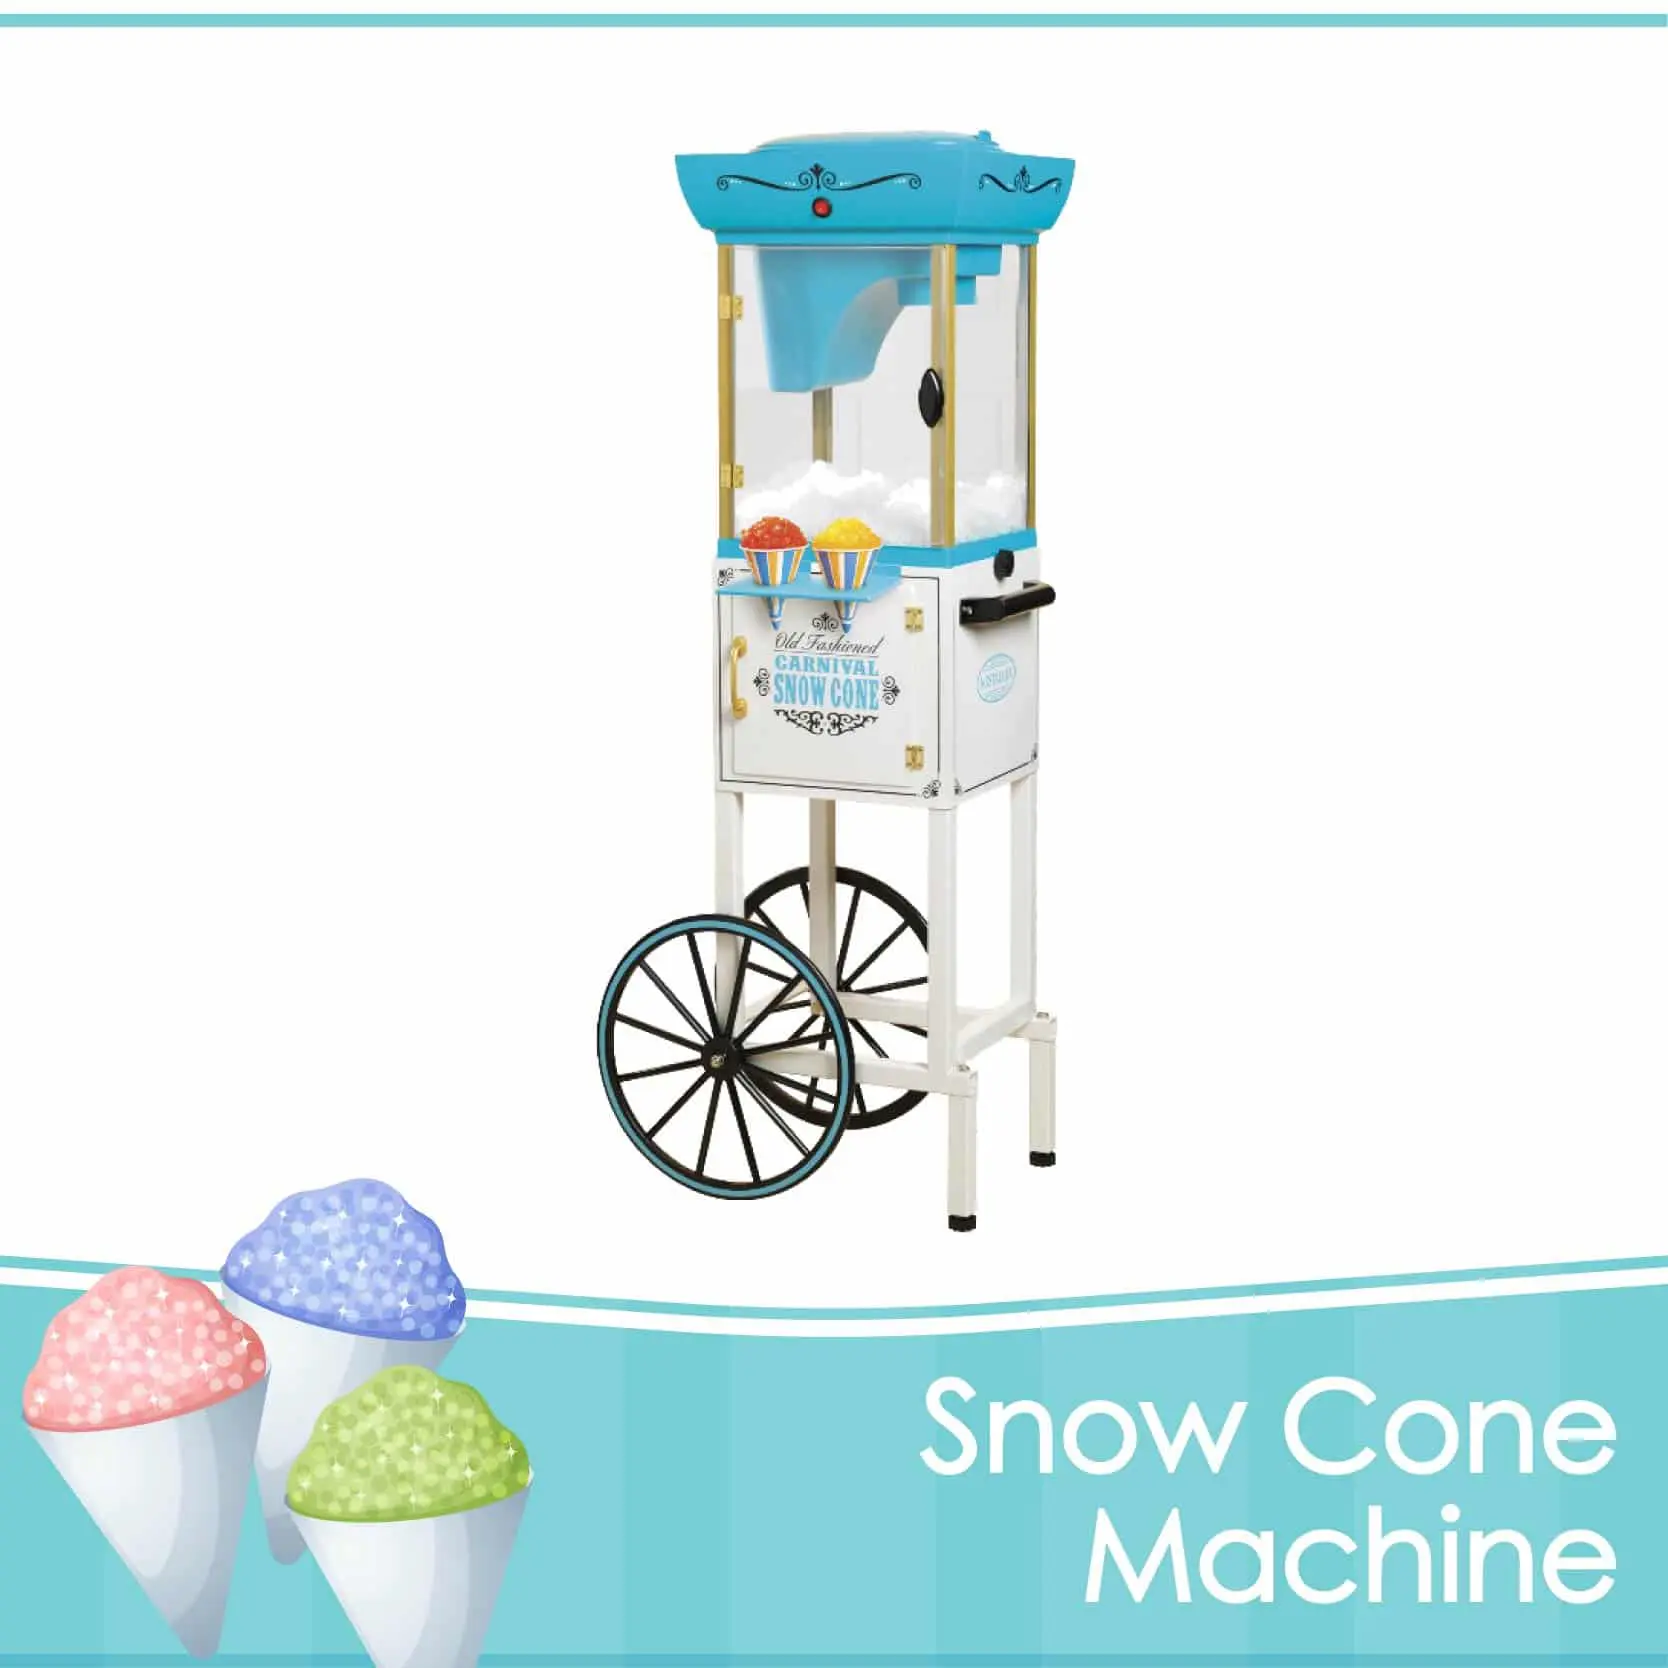 Snowcone Machine Rental in NY